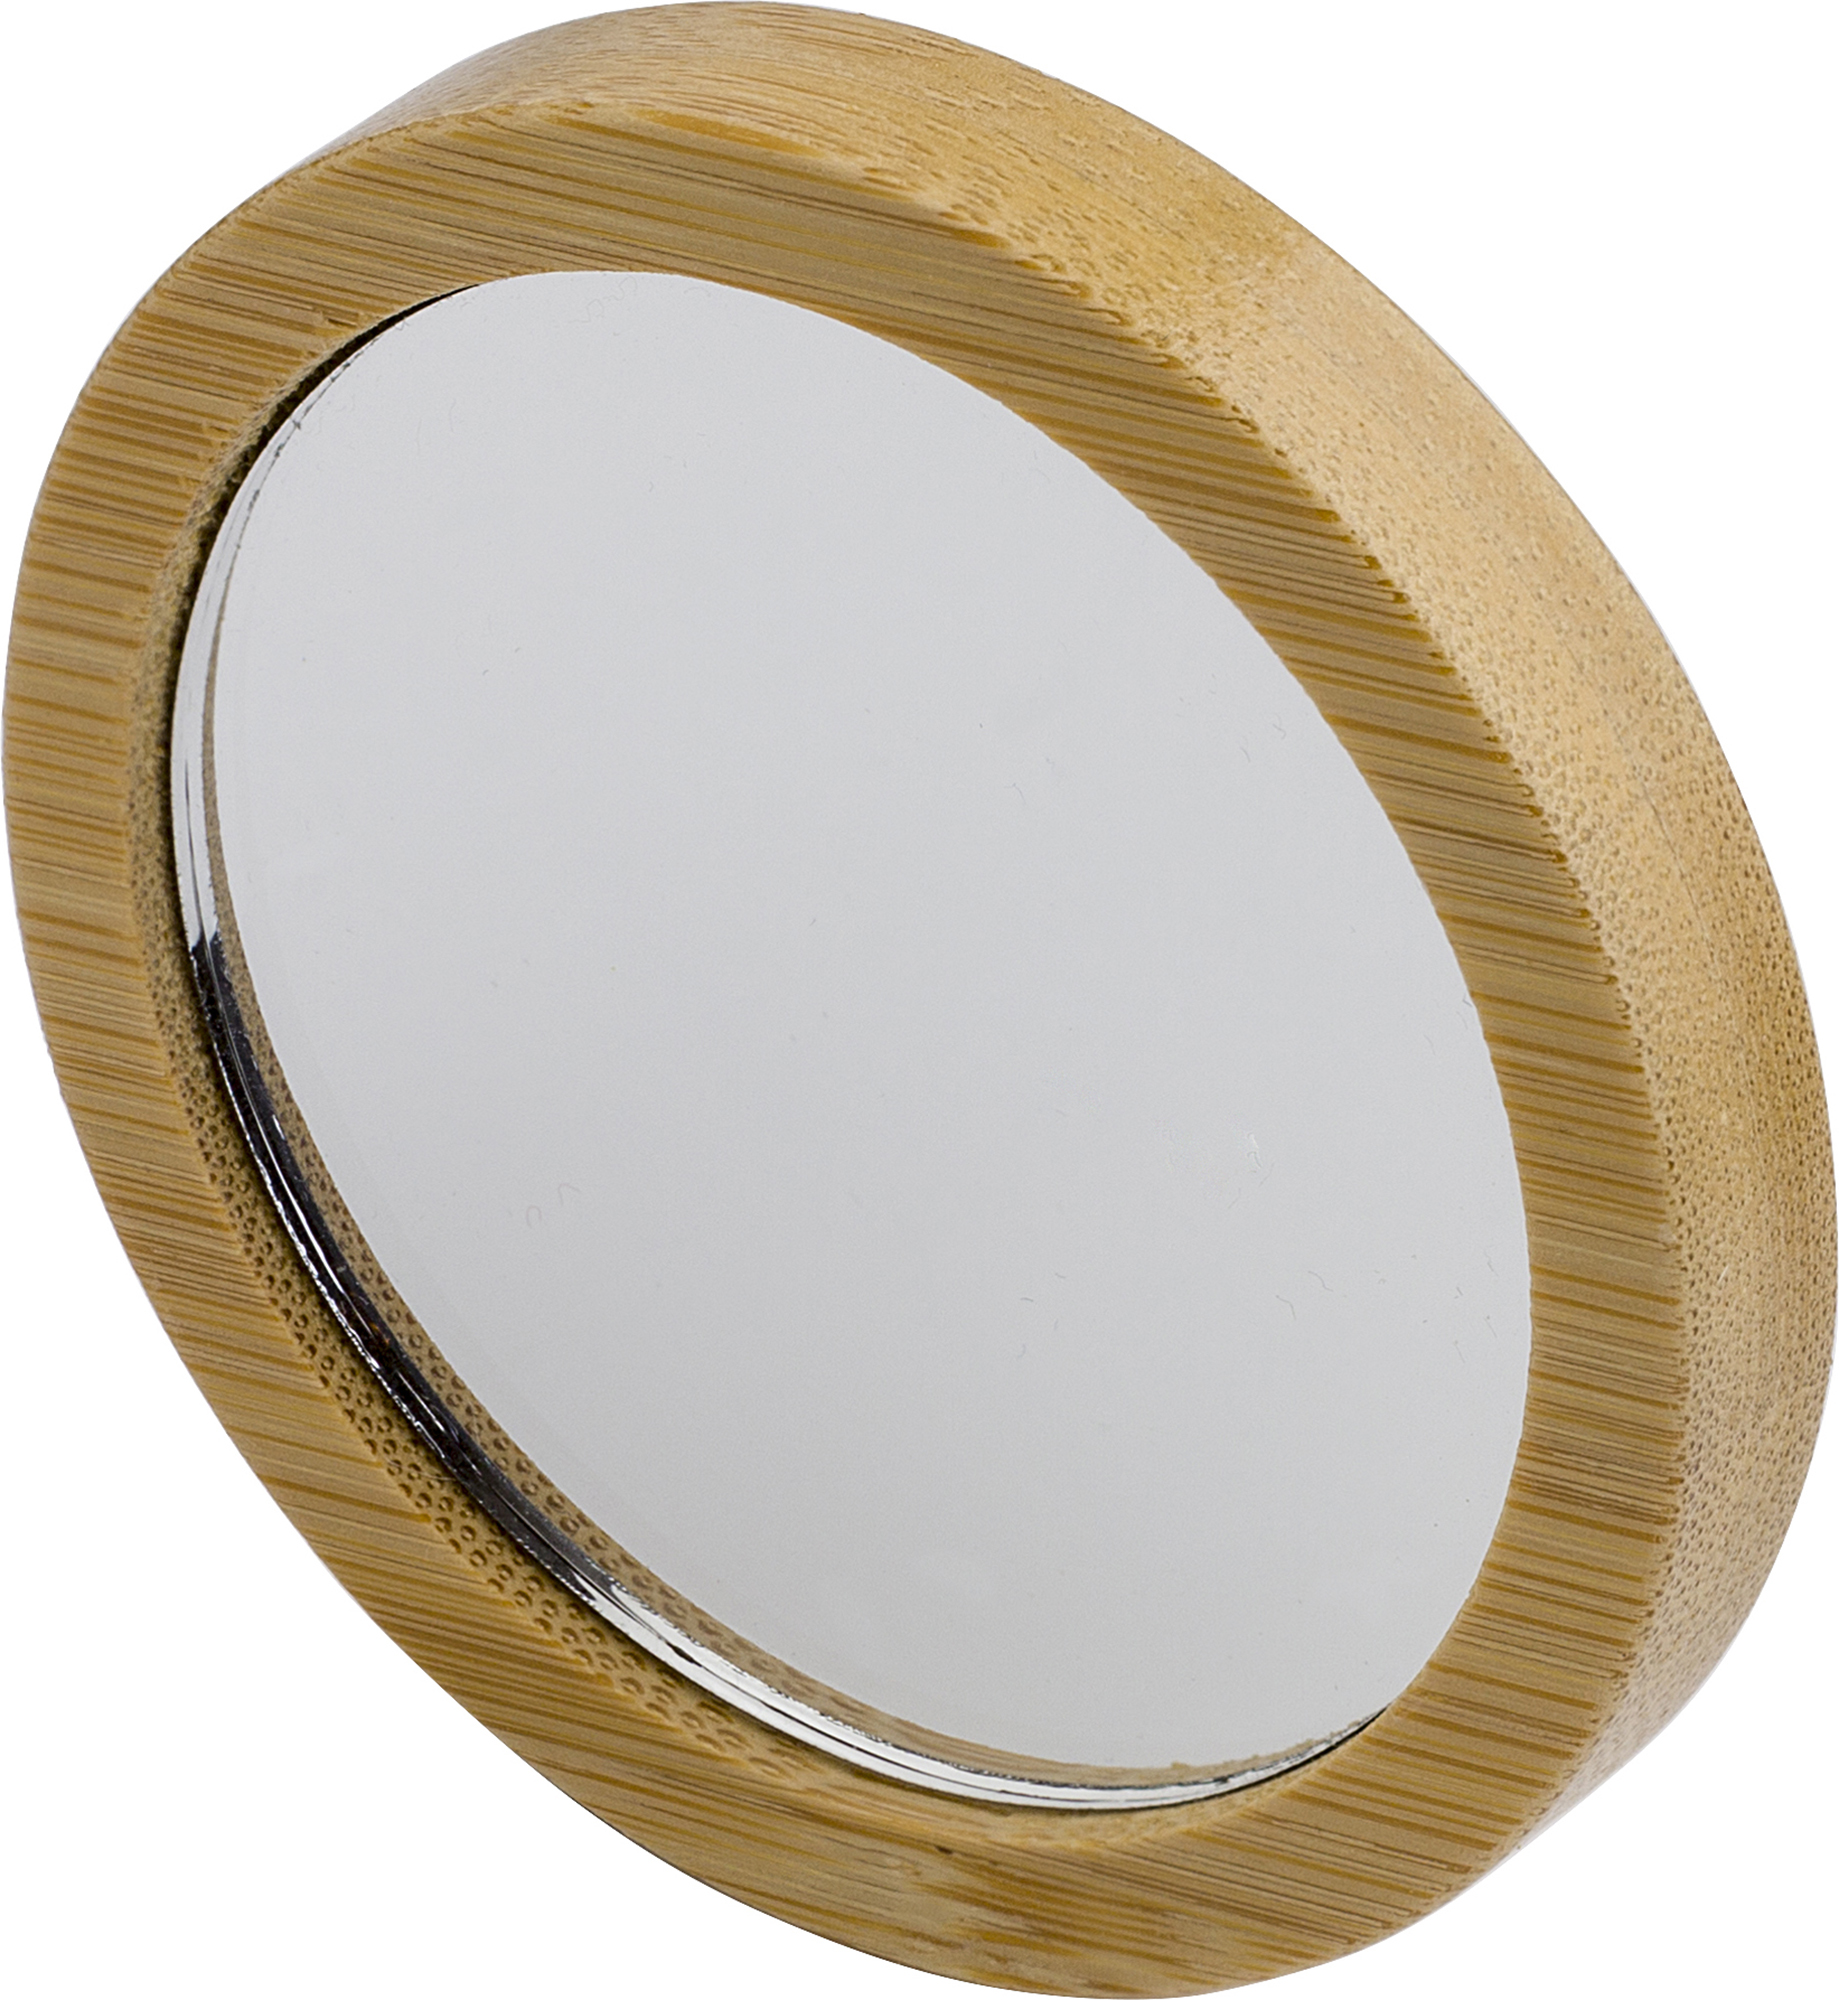 000000971862 011999999 3d135 lft pro03 2023 fal - Bamboo pocket mirror